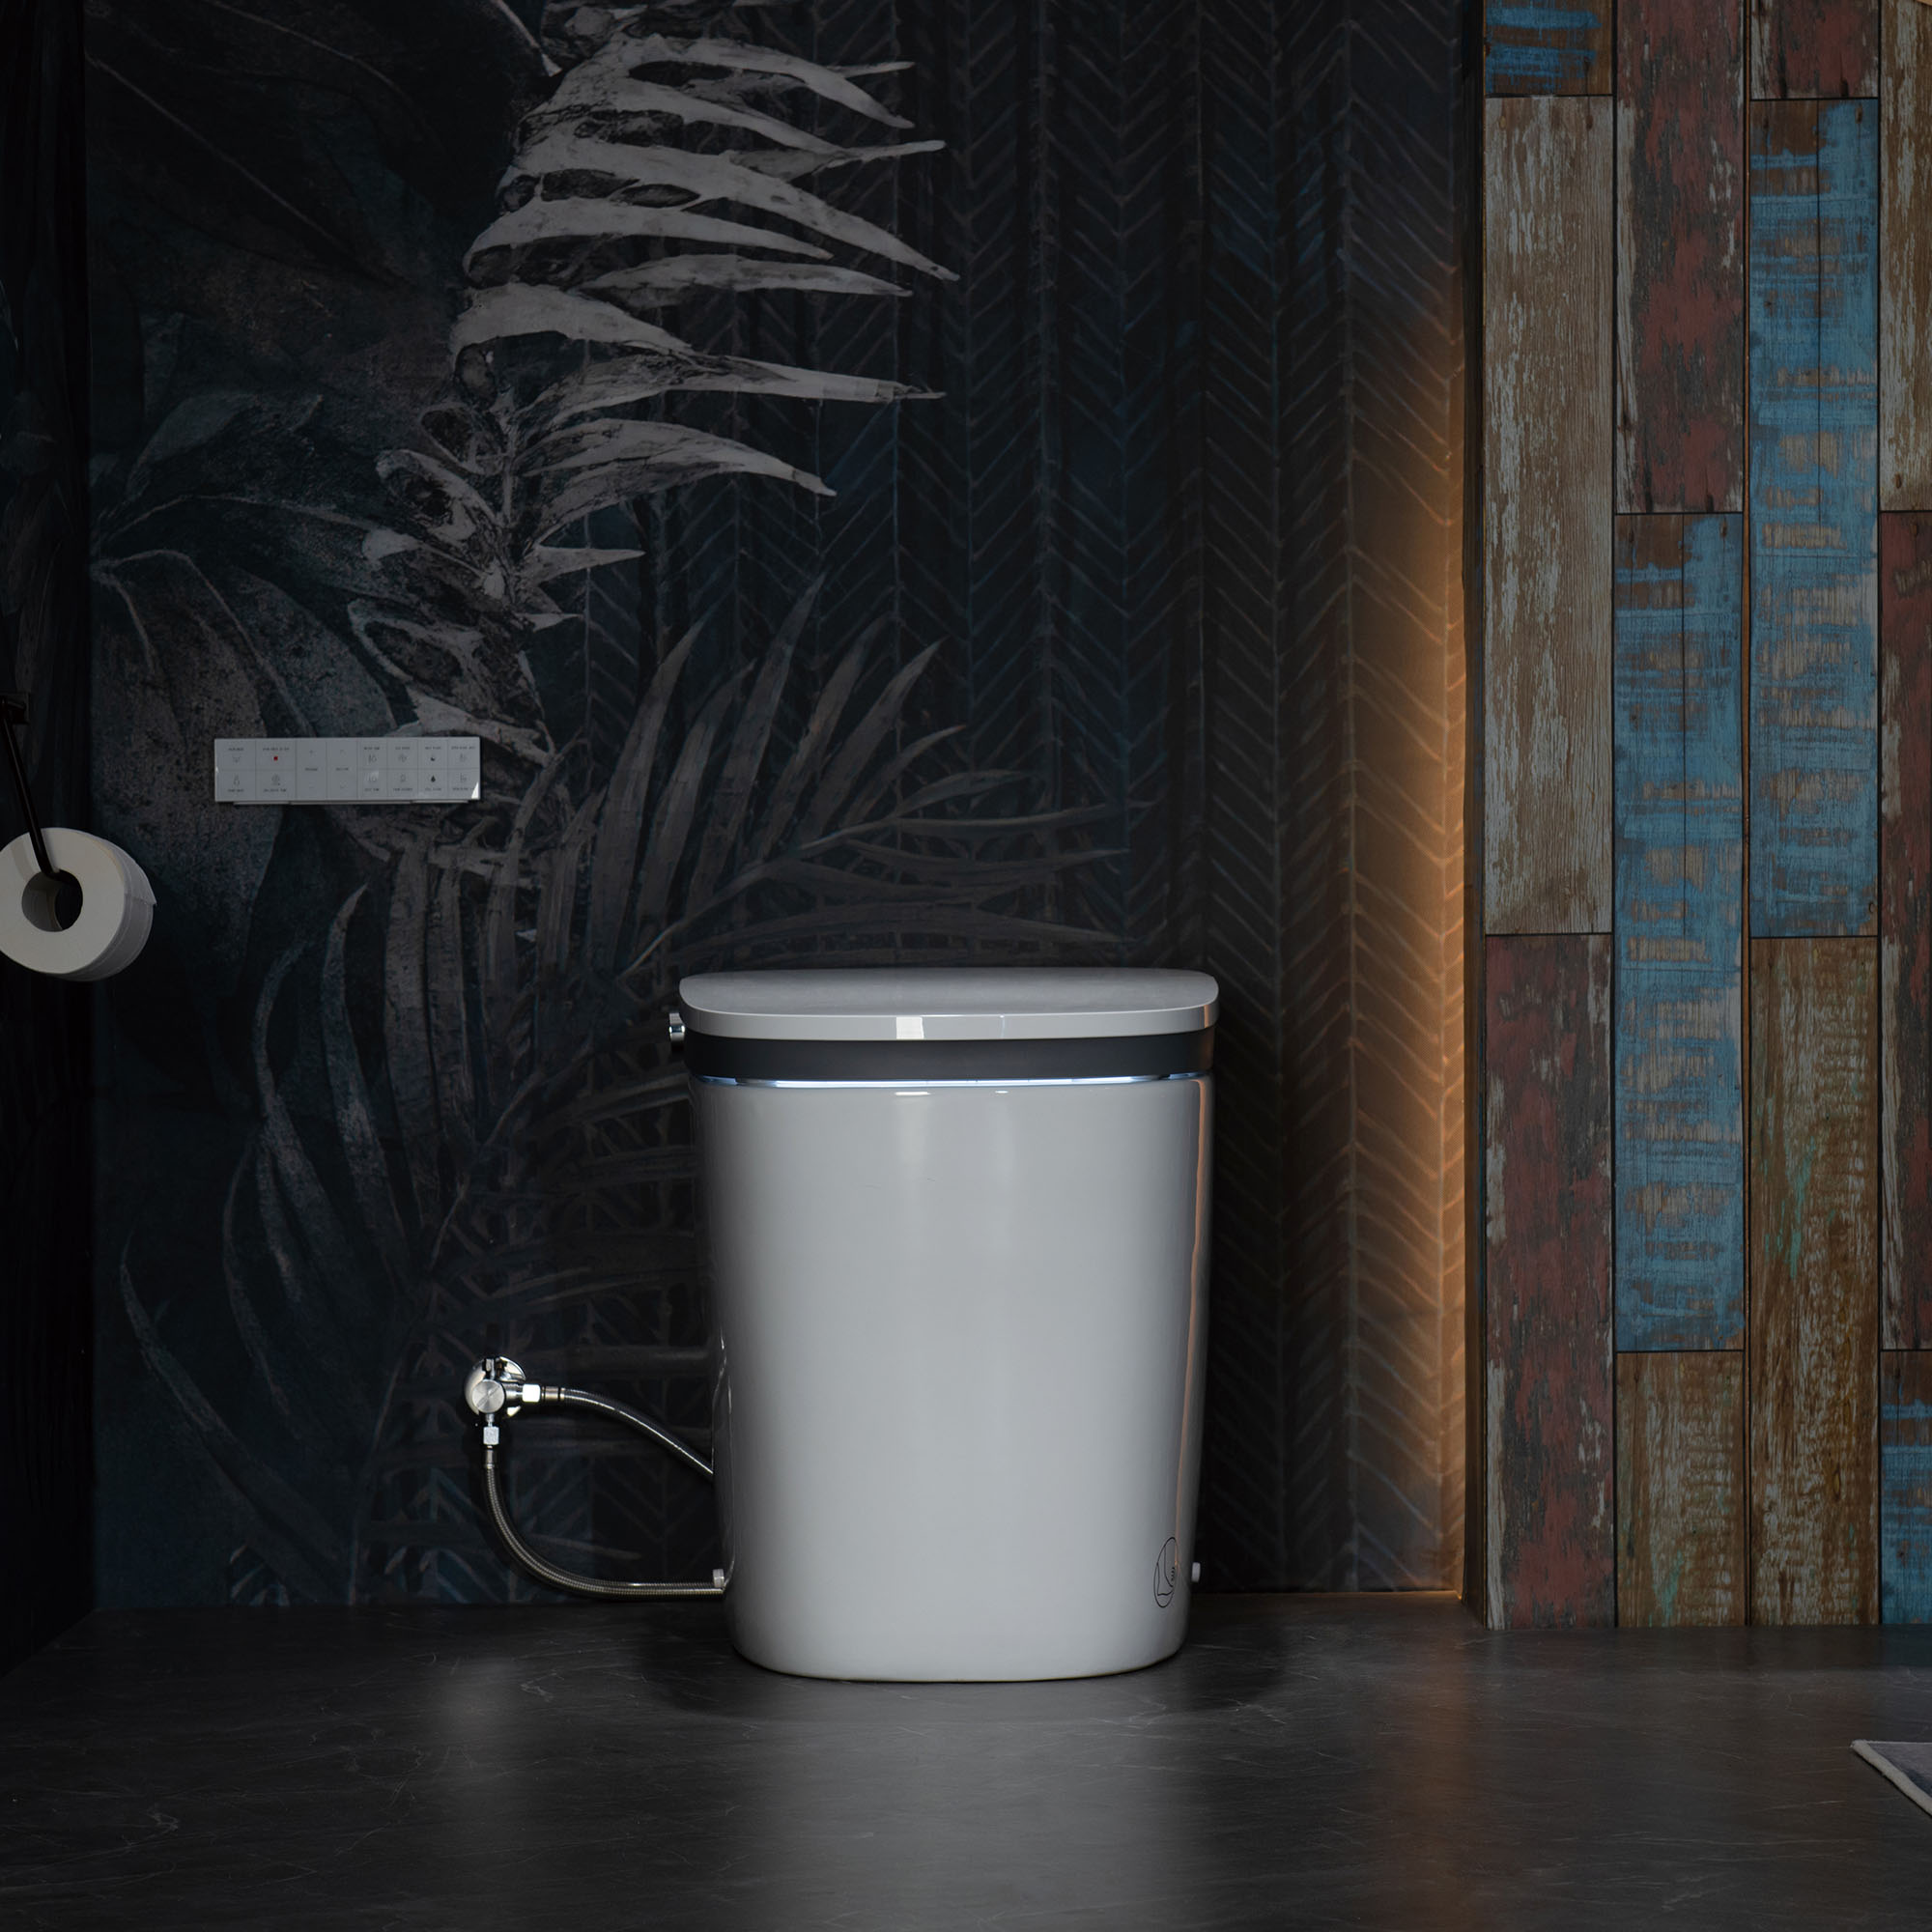  WOODBRIDGE B0931S Smart Bidet Toilet with 1.28 GPF Dual Flush Auto Open & Close, Foot Sensor Flush, Voice Control,1000 Gram Map Flushing Score, LED Display, Chair Height Design and Cleaning Foam Dispenser_14563